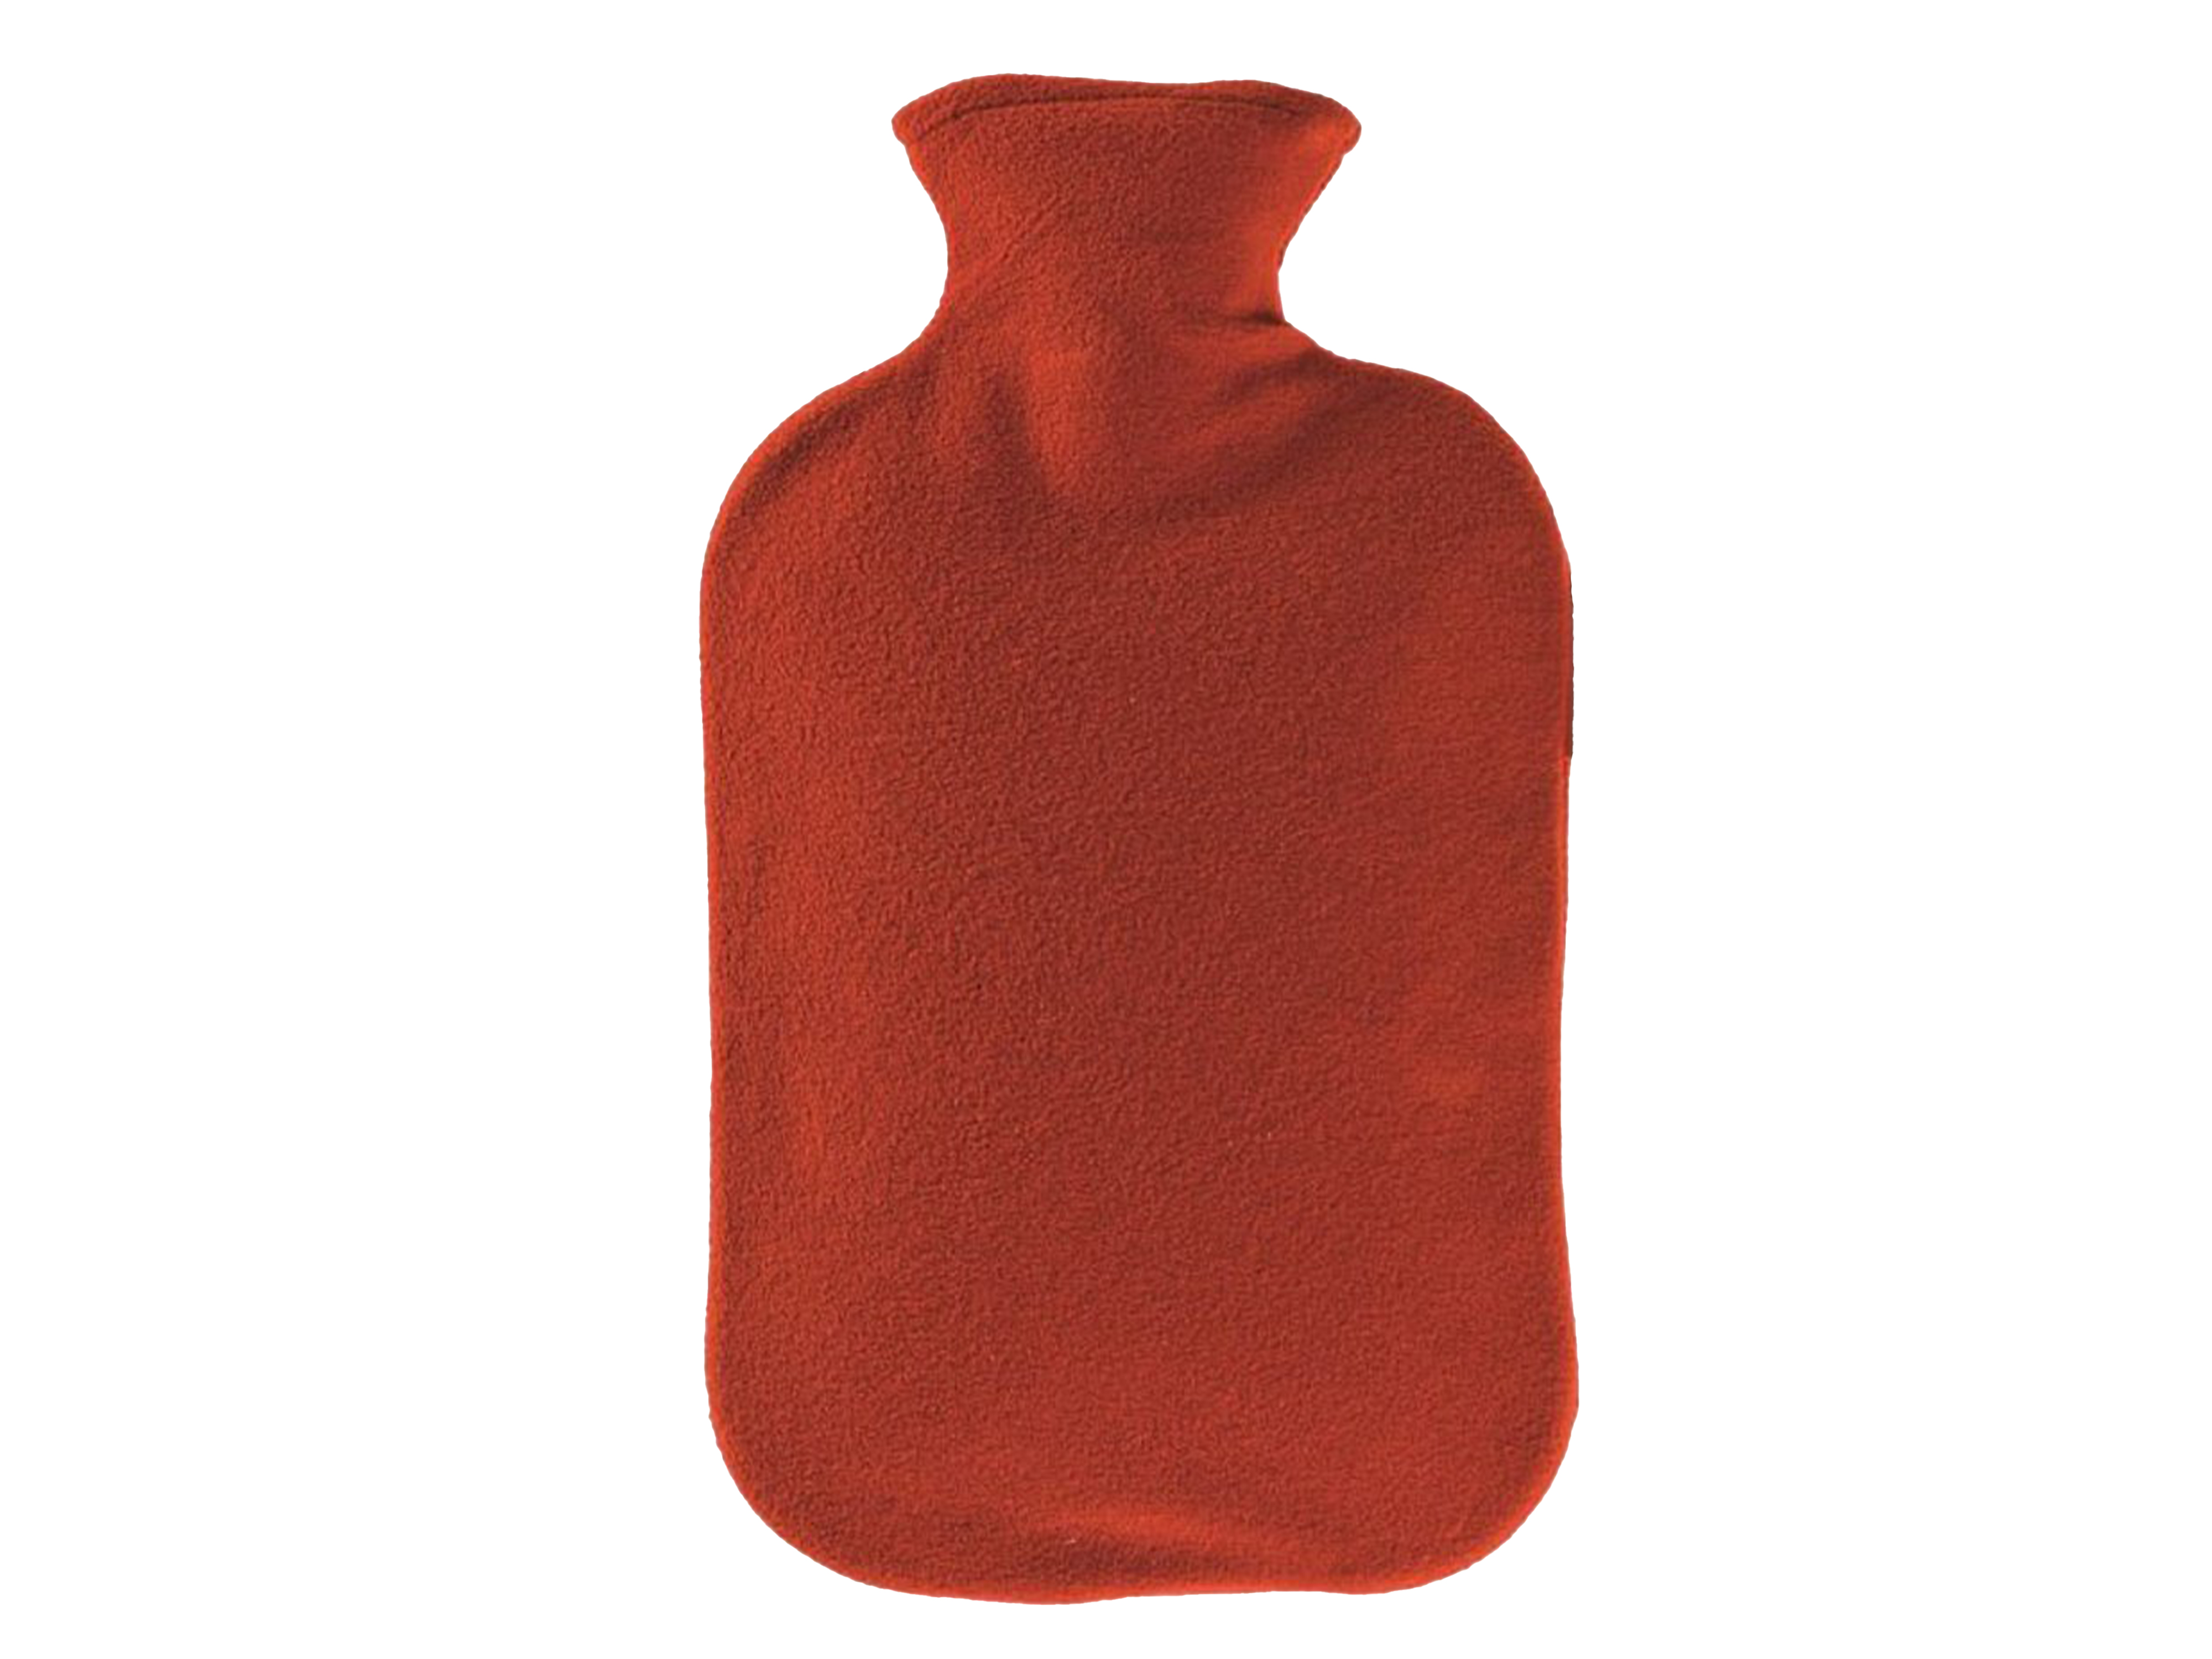 Fashy Varmeflaske med fleecetrekk, 2 liter, rød, 1 stk.